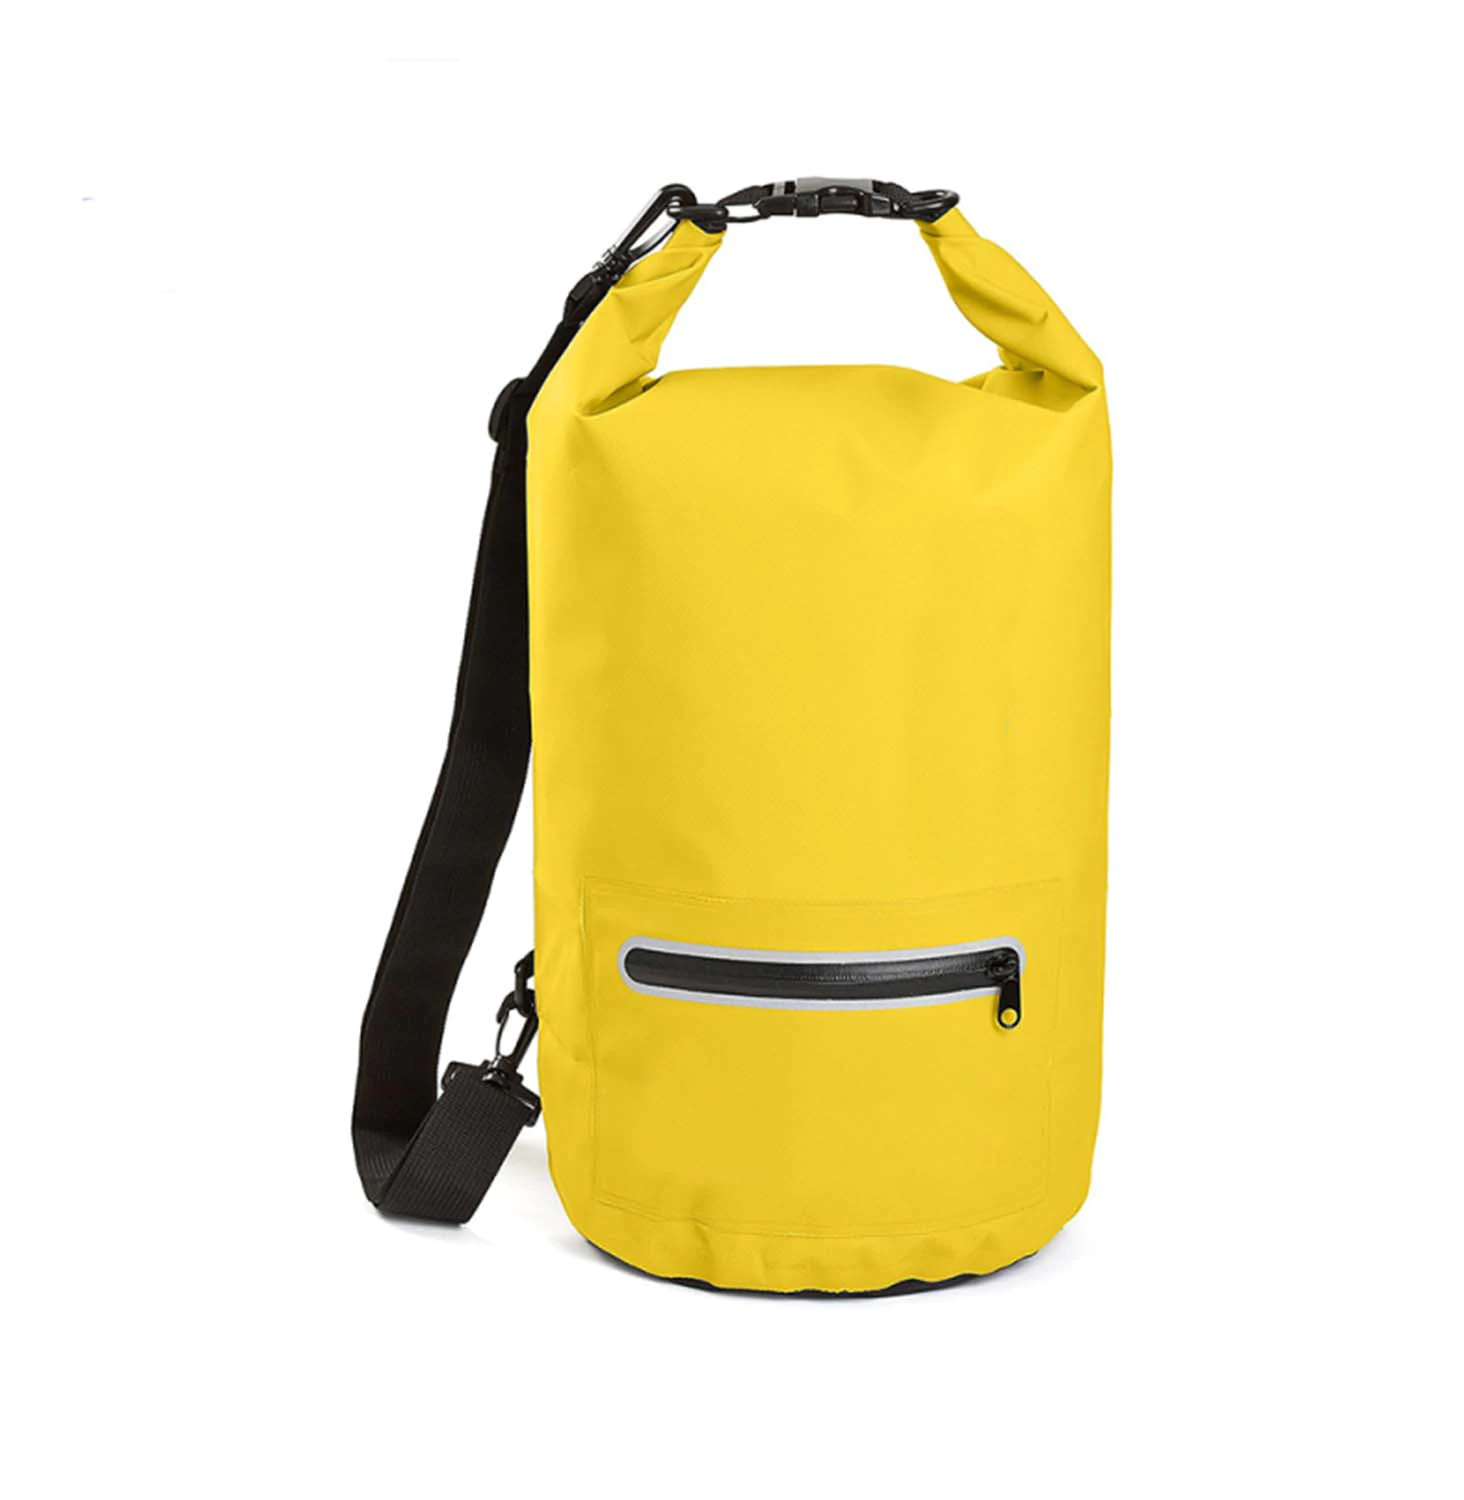 Prosperity best dry bag for swimming distributor open water swim buoy flotation device